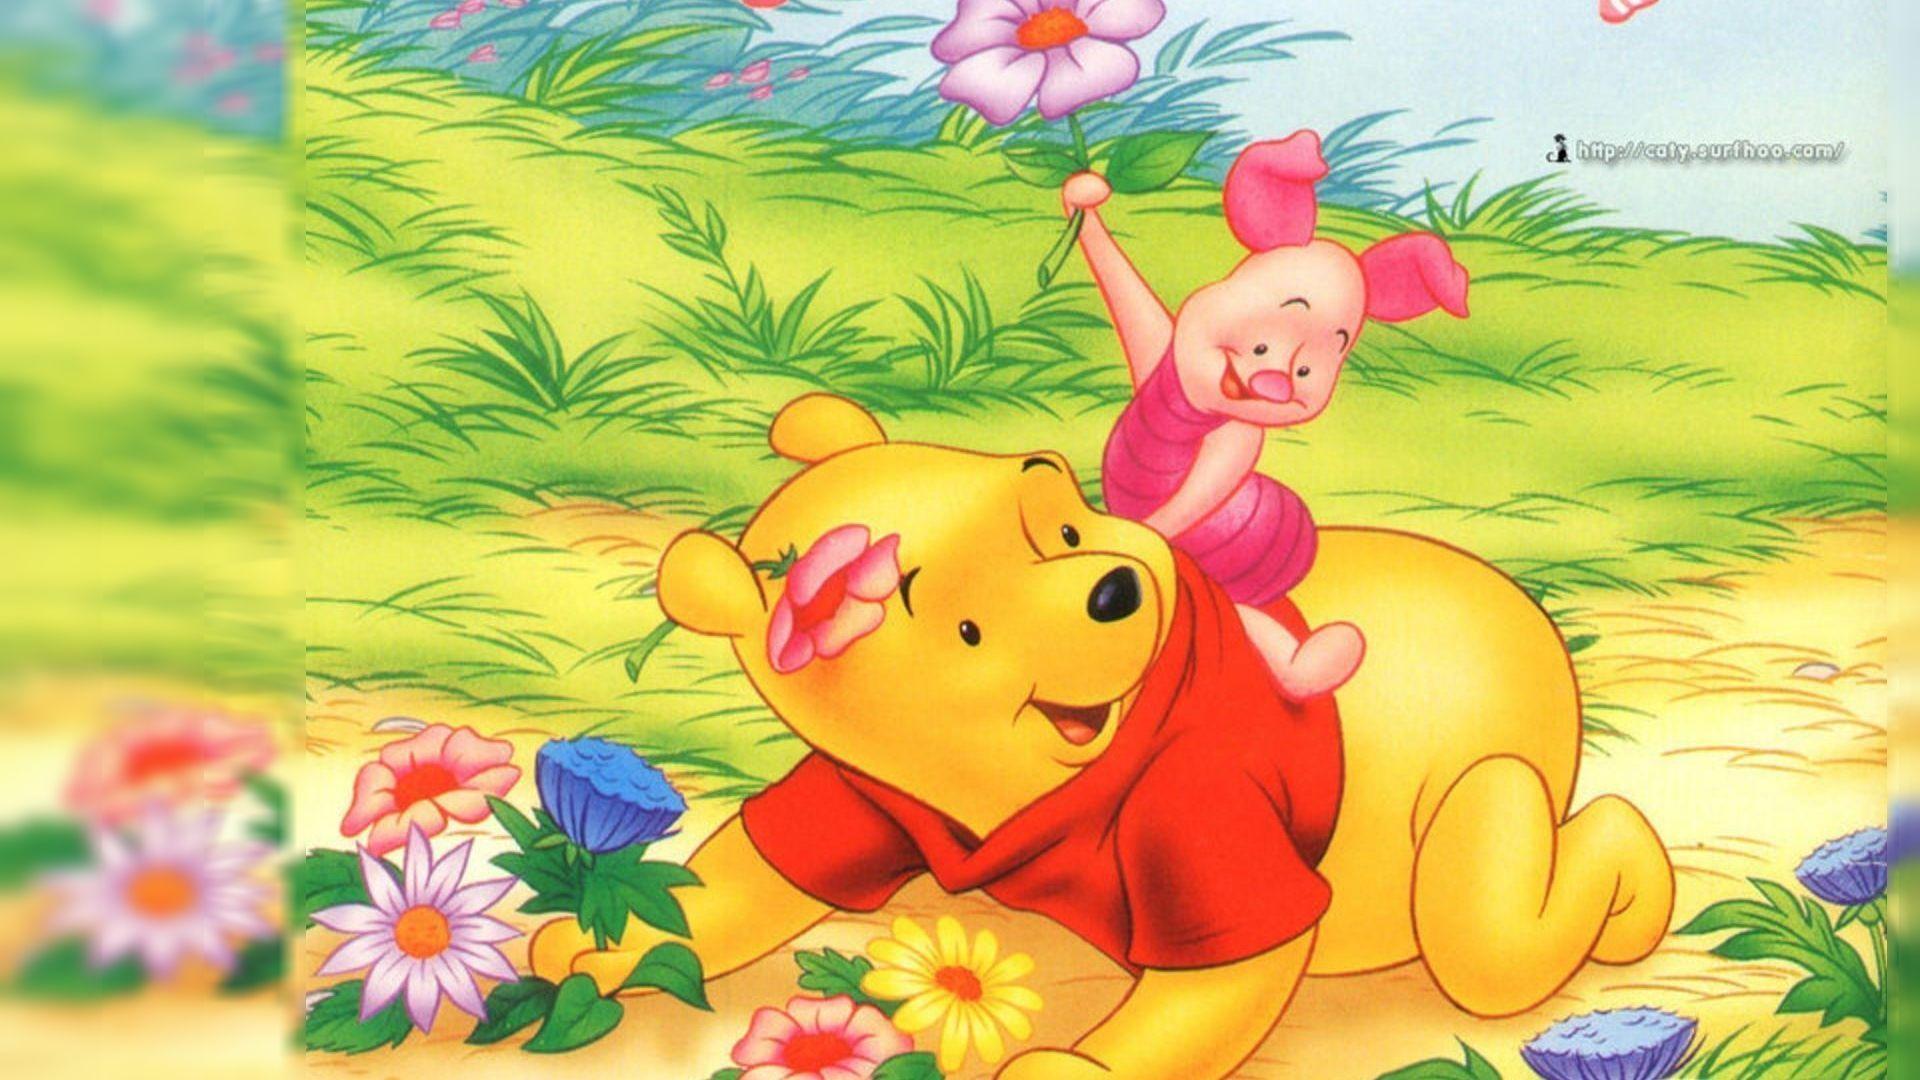 Wallpaper For > Winnie The Pooh Wallpaper Valentine